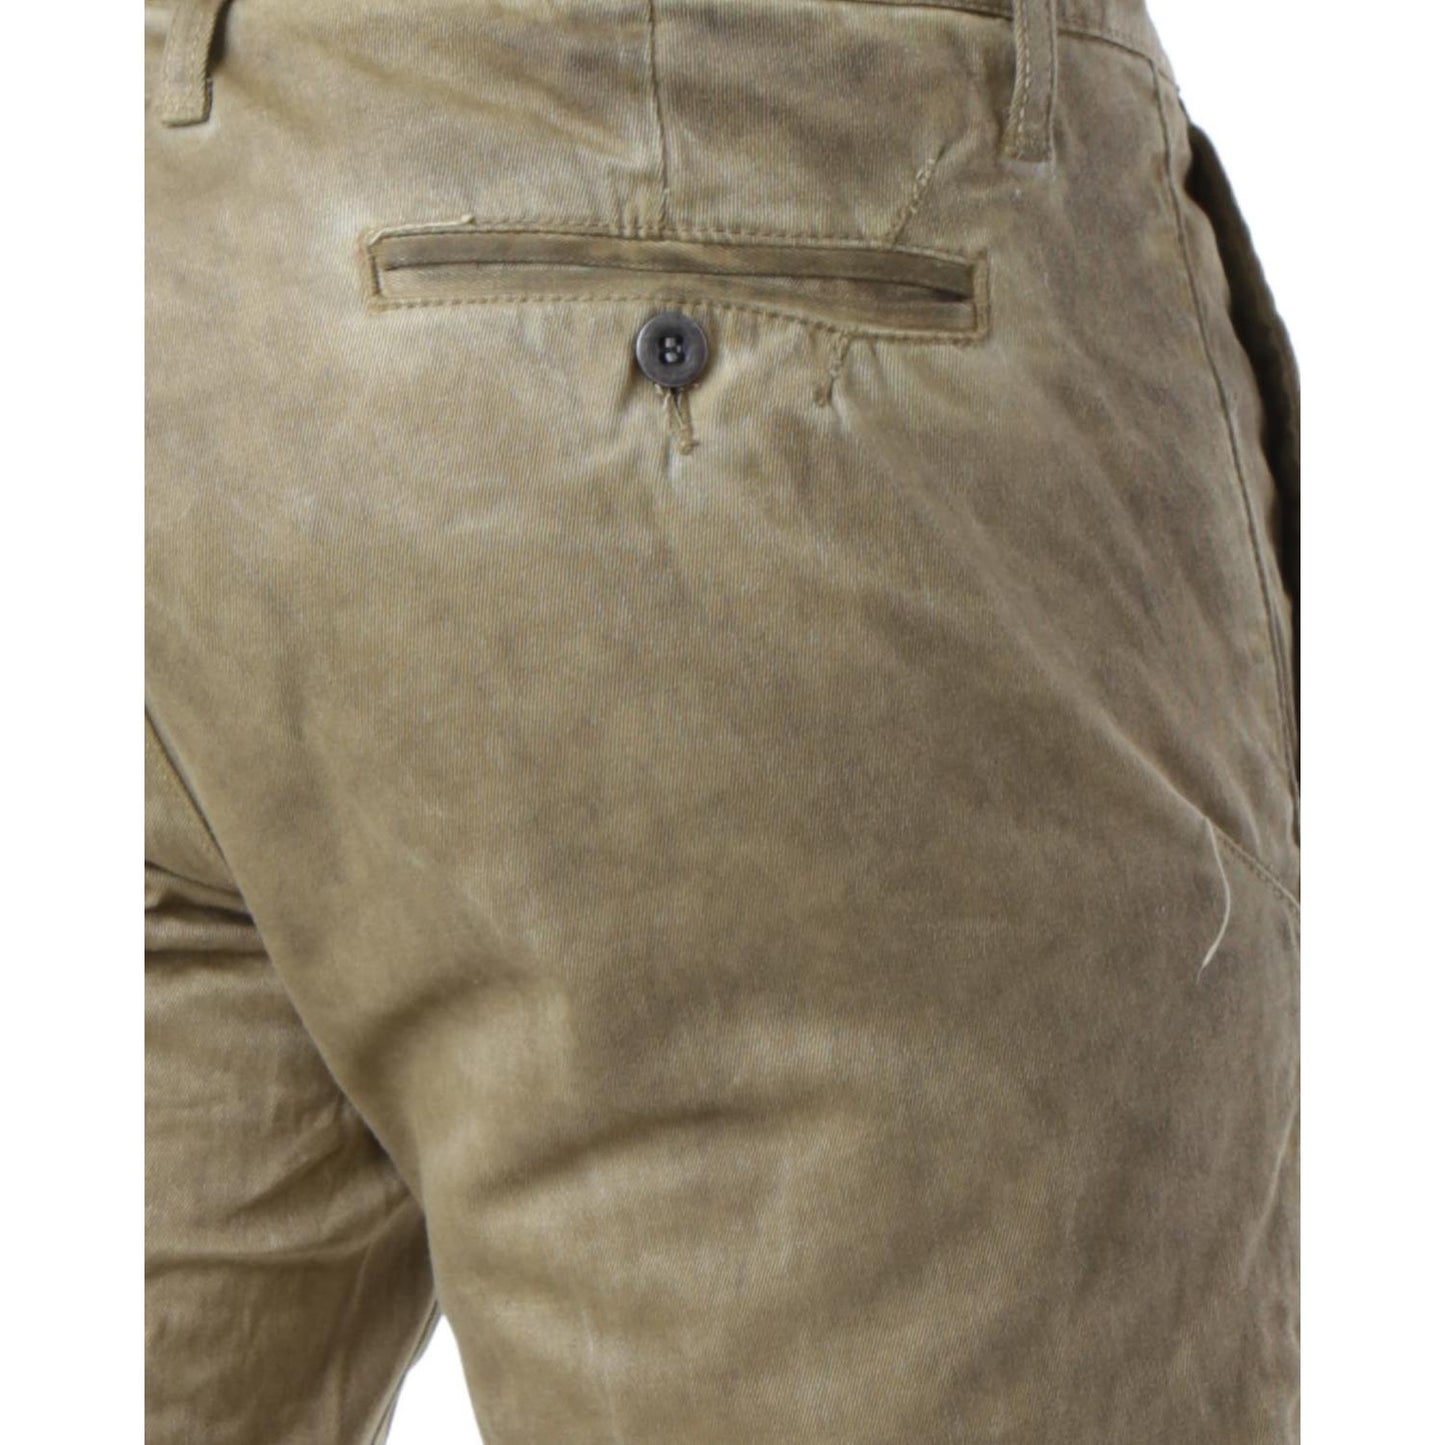 Pantaloni jeans uomo regular fit cotone 525 multitasche tinta unita